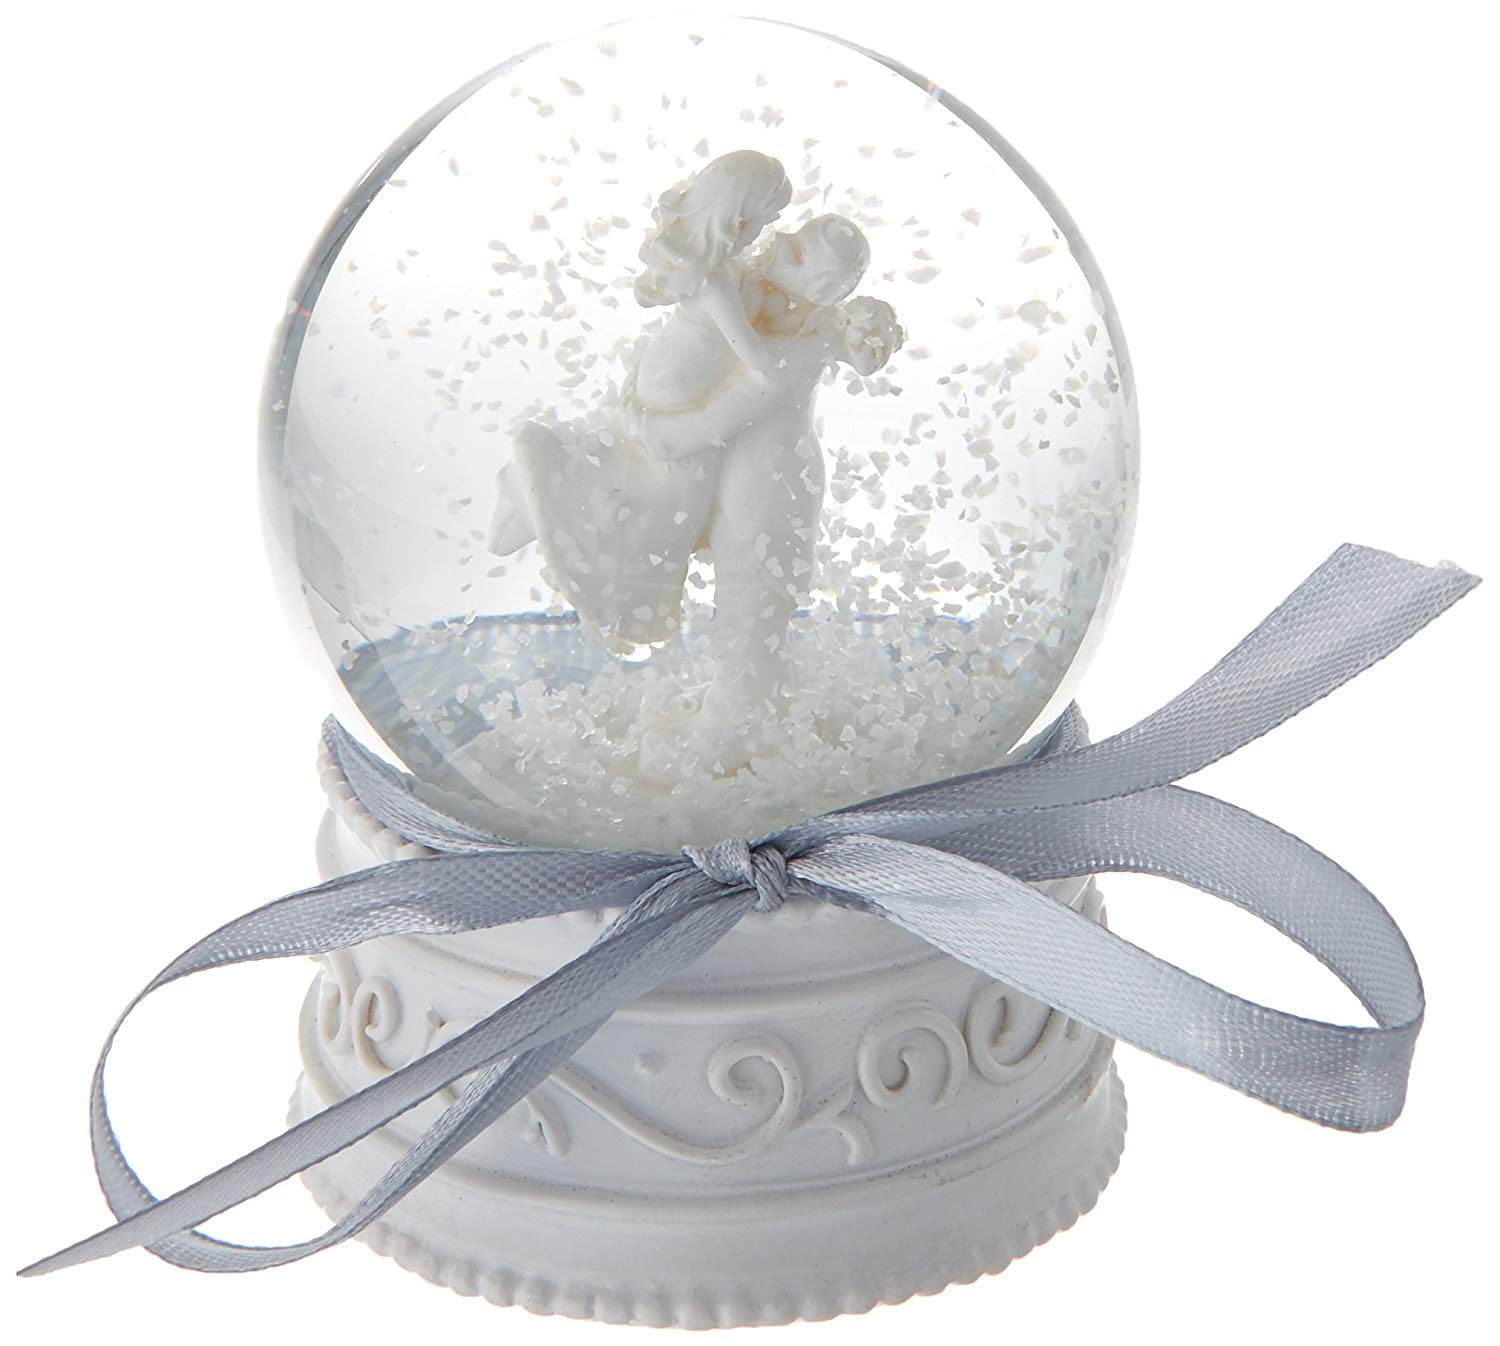 Artisano Designs Forever in Love Couple Snow Globe Favor